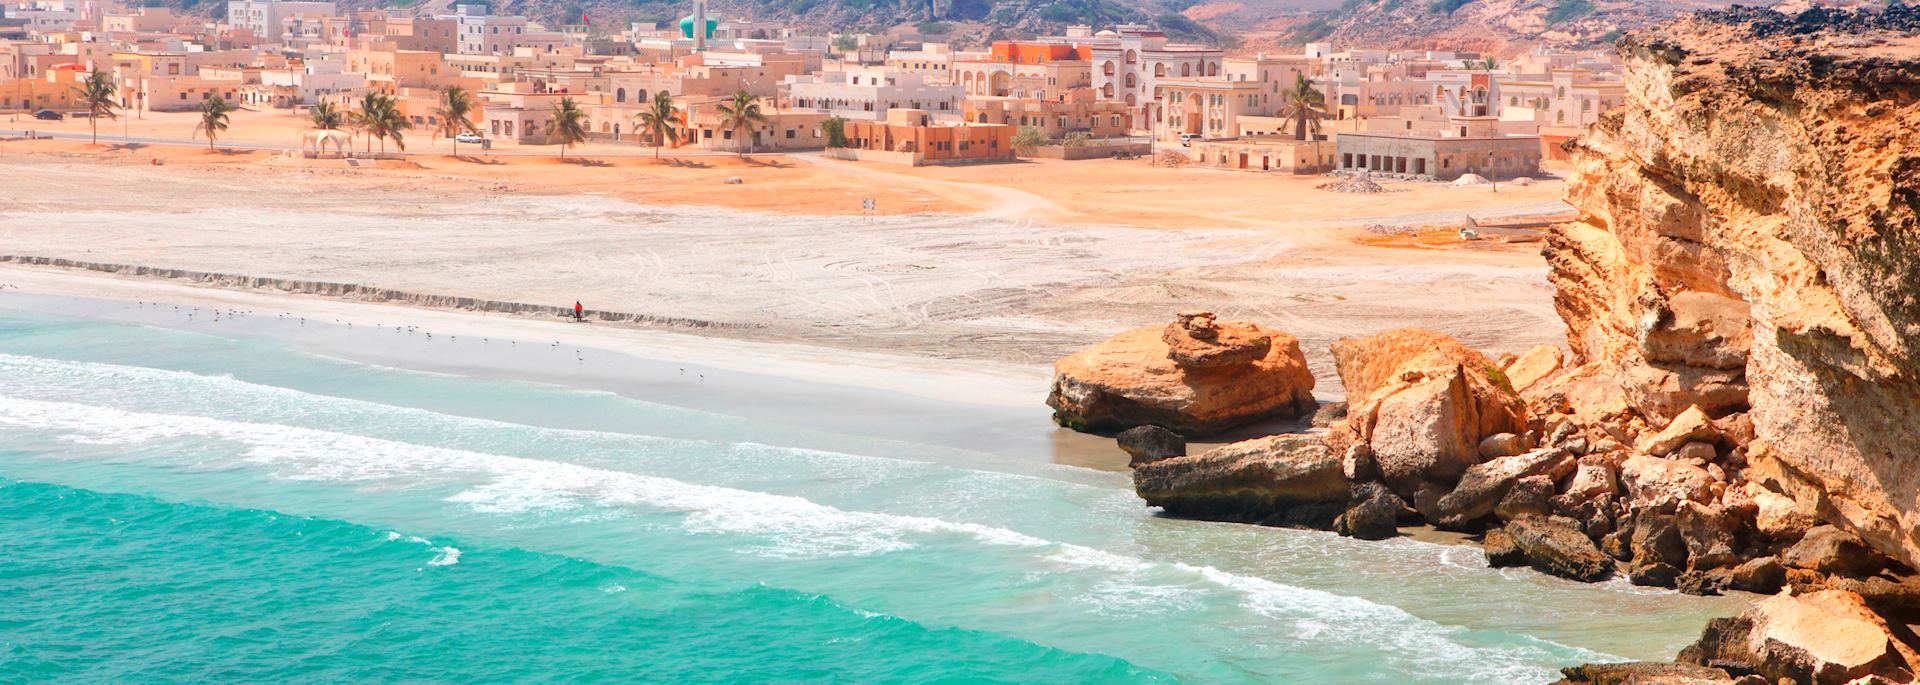 Coastal town of Taqah, Dhofar Region